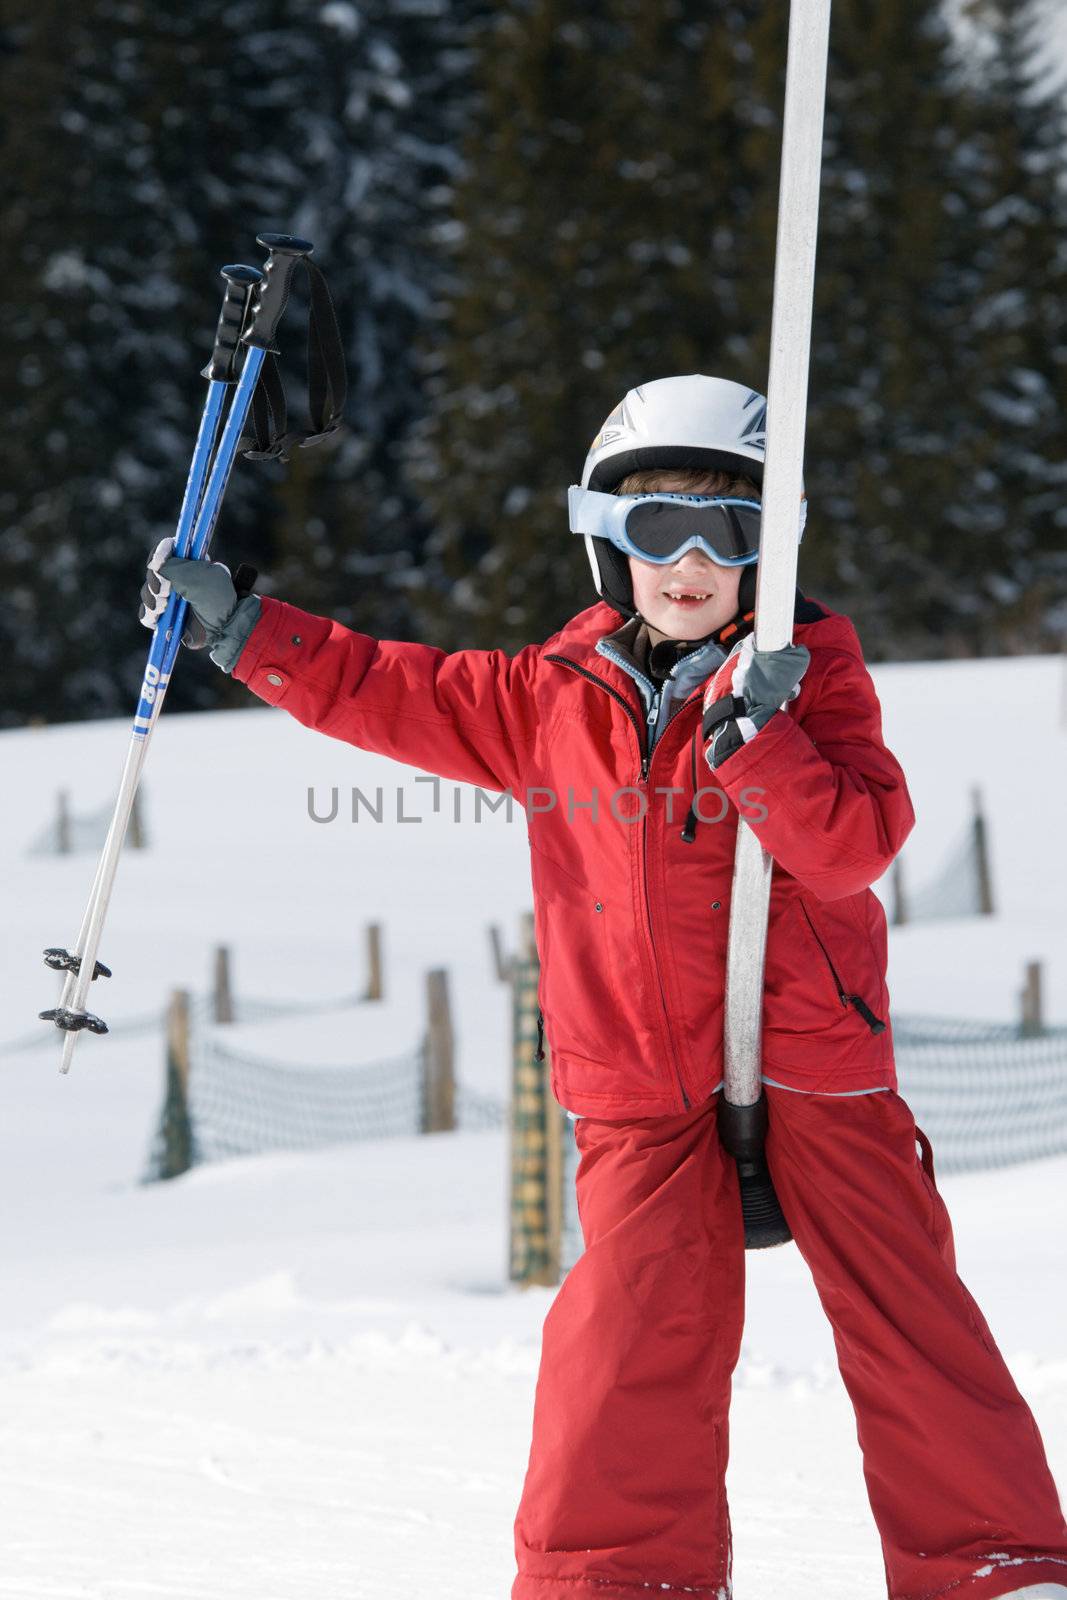 Smiling boy on a ski lift carrying ski poles